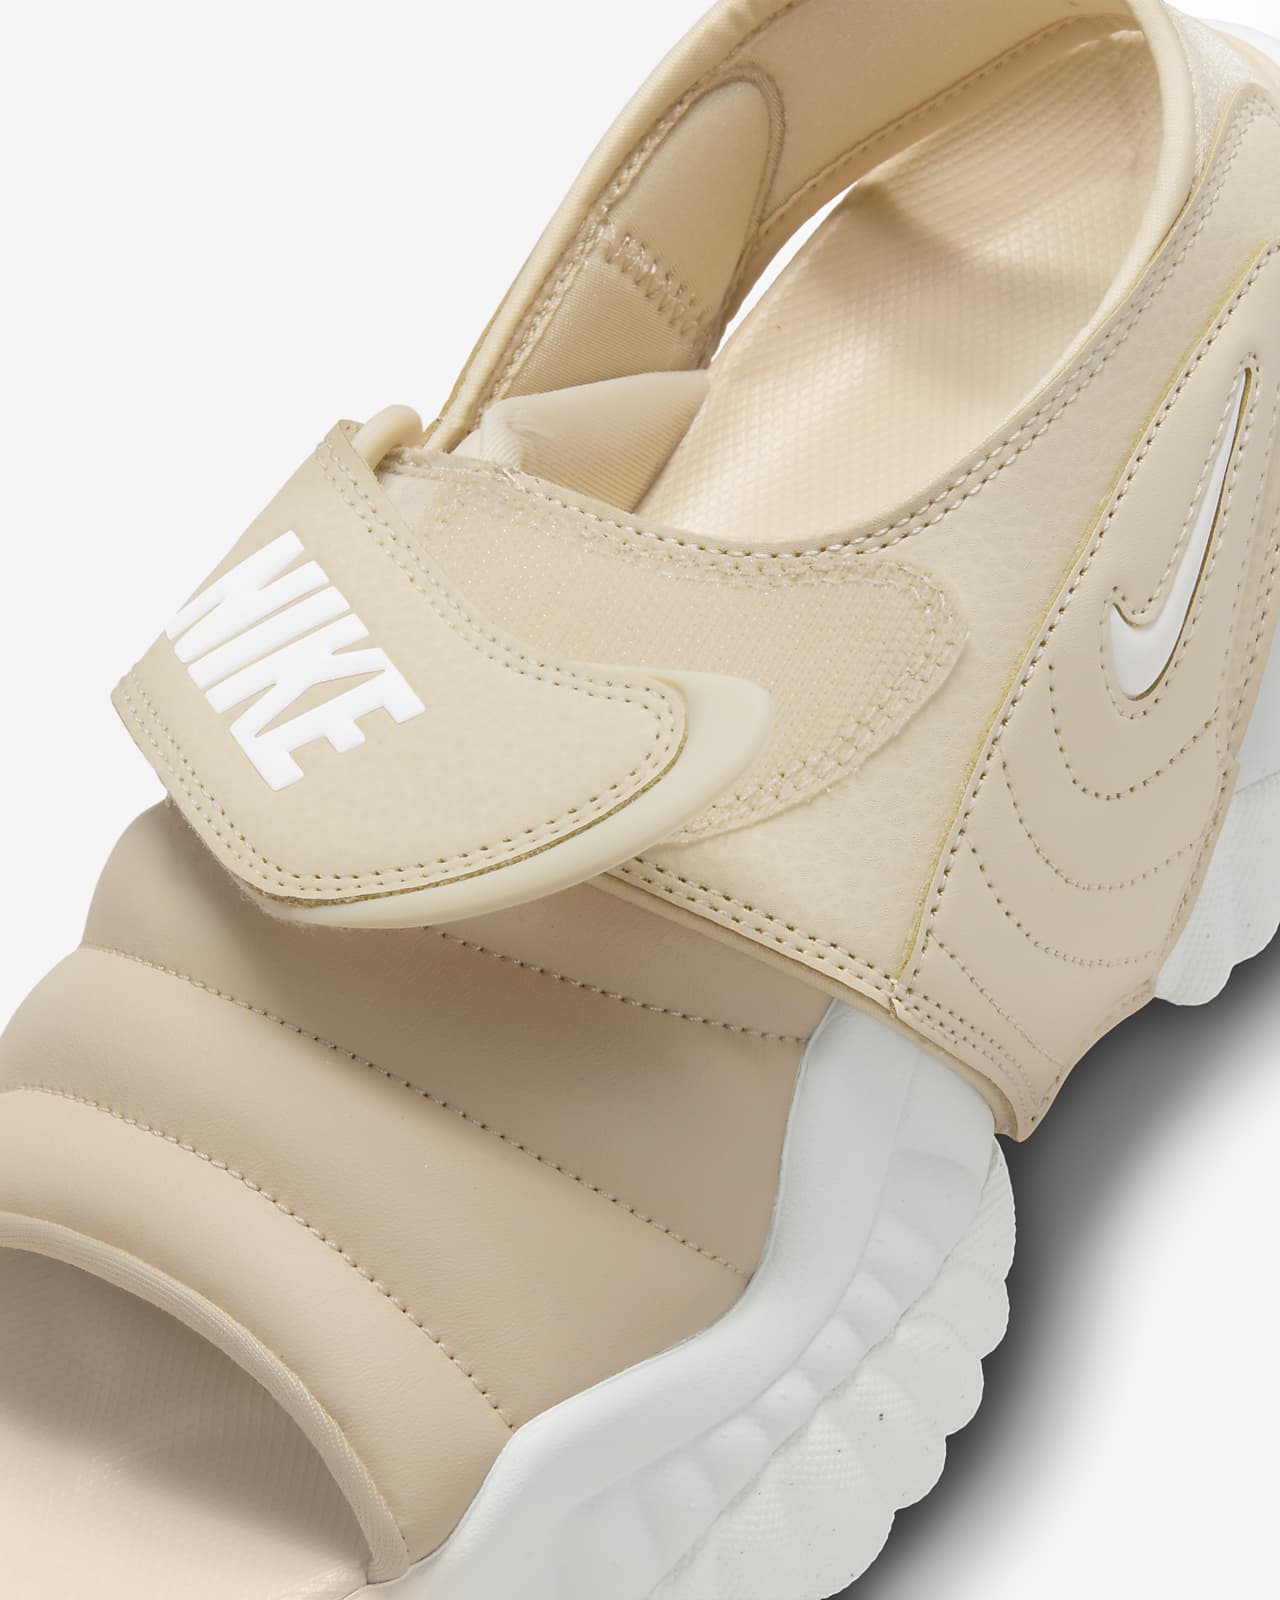 Nike Adjust Force Women's Sandals. Nike SG